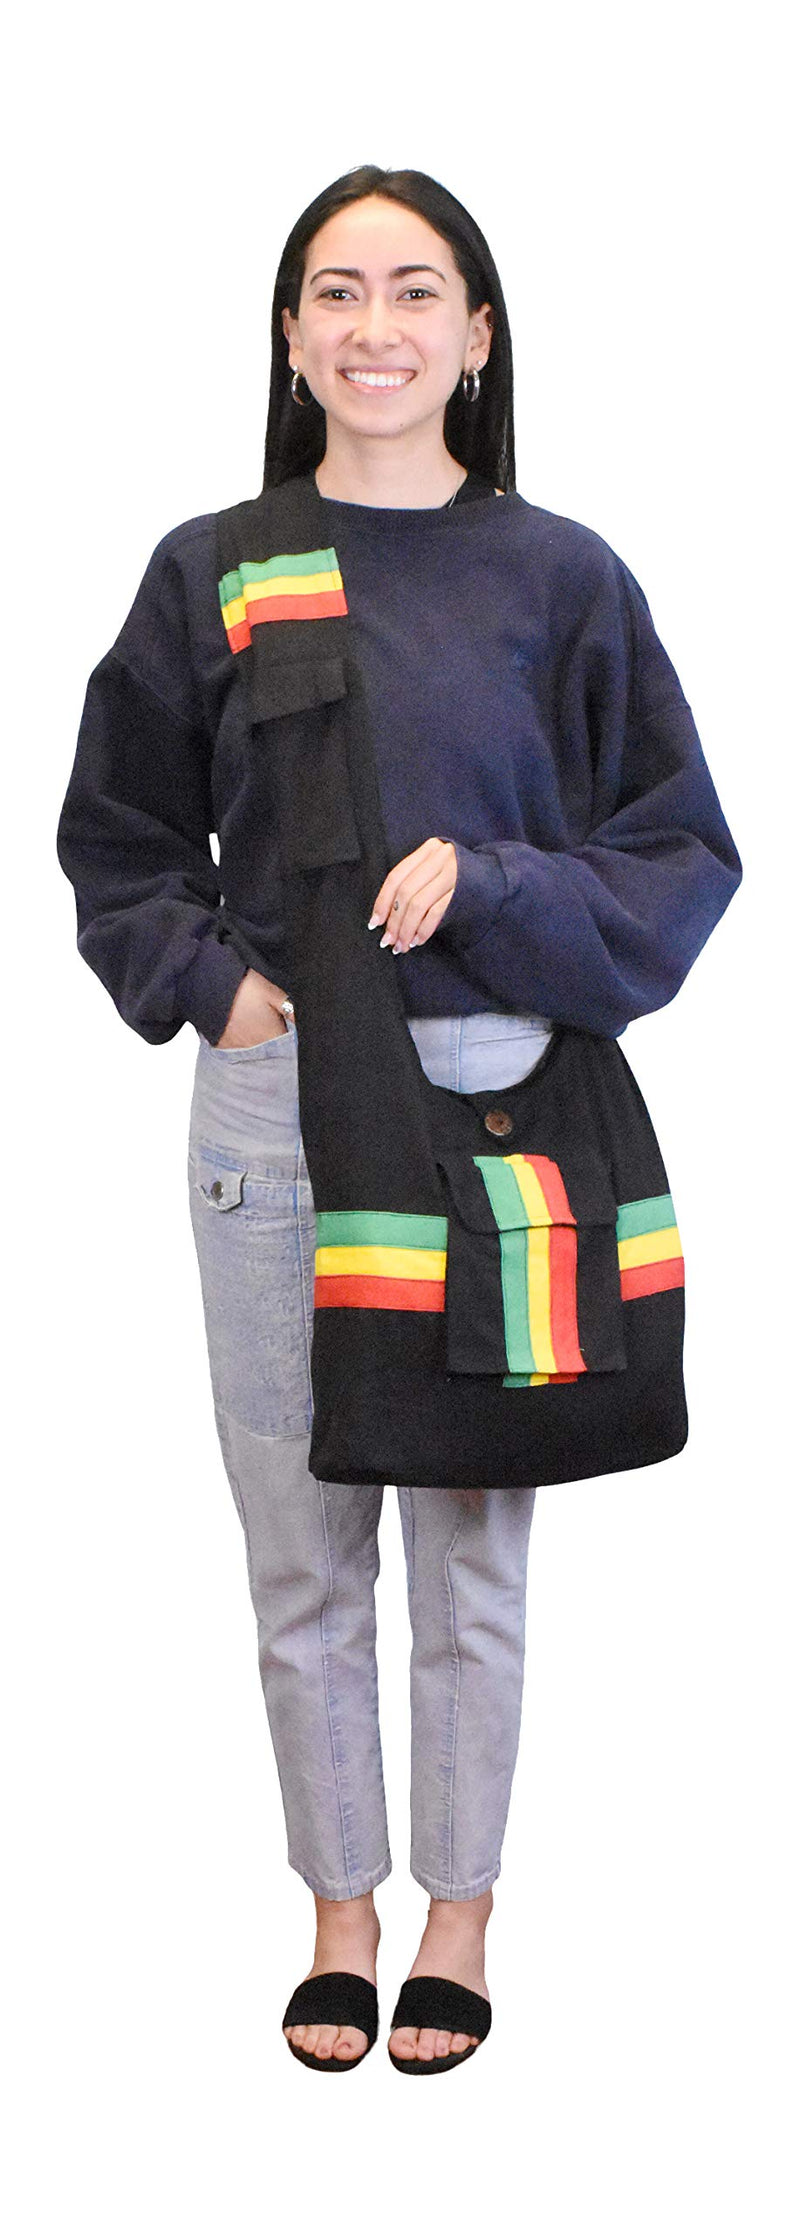 Hippie Bag - Boho Bag - Hobo Indie Style Hippie Crossbody Bag - Bohemian Sling Shoulder Bag Rasta Stripe